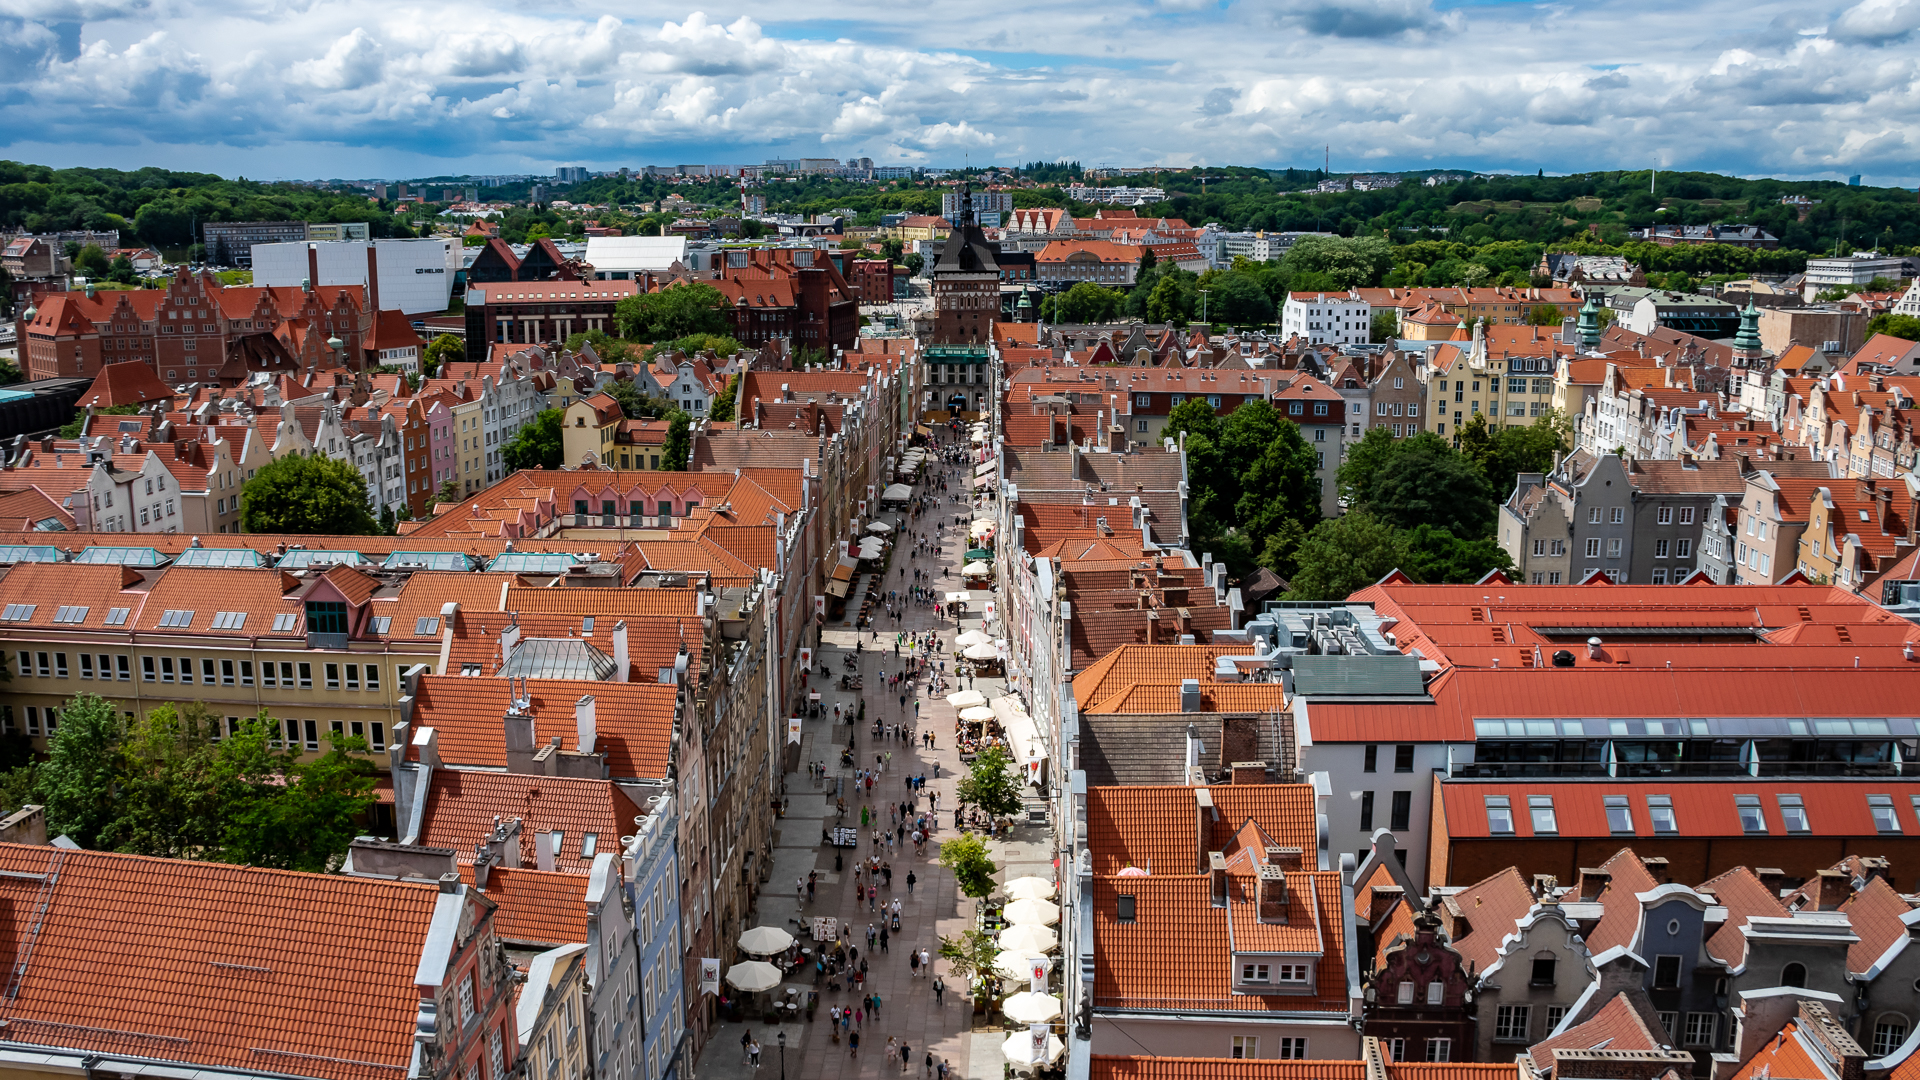 Gdańsk Town Hall views